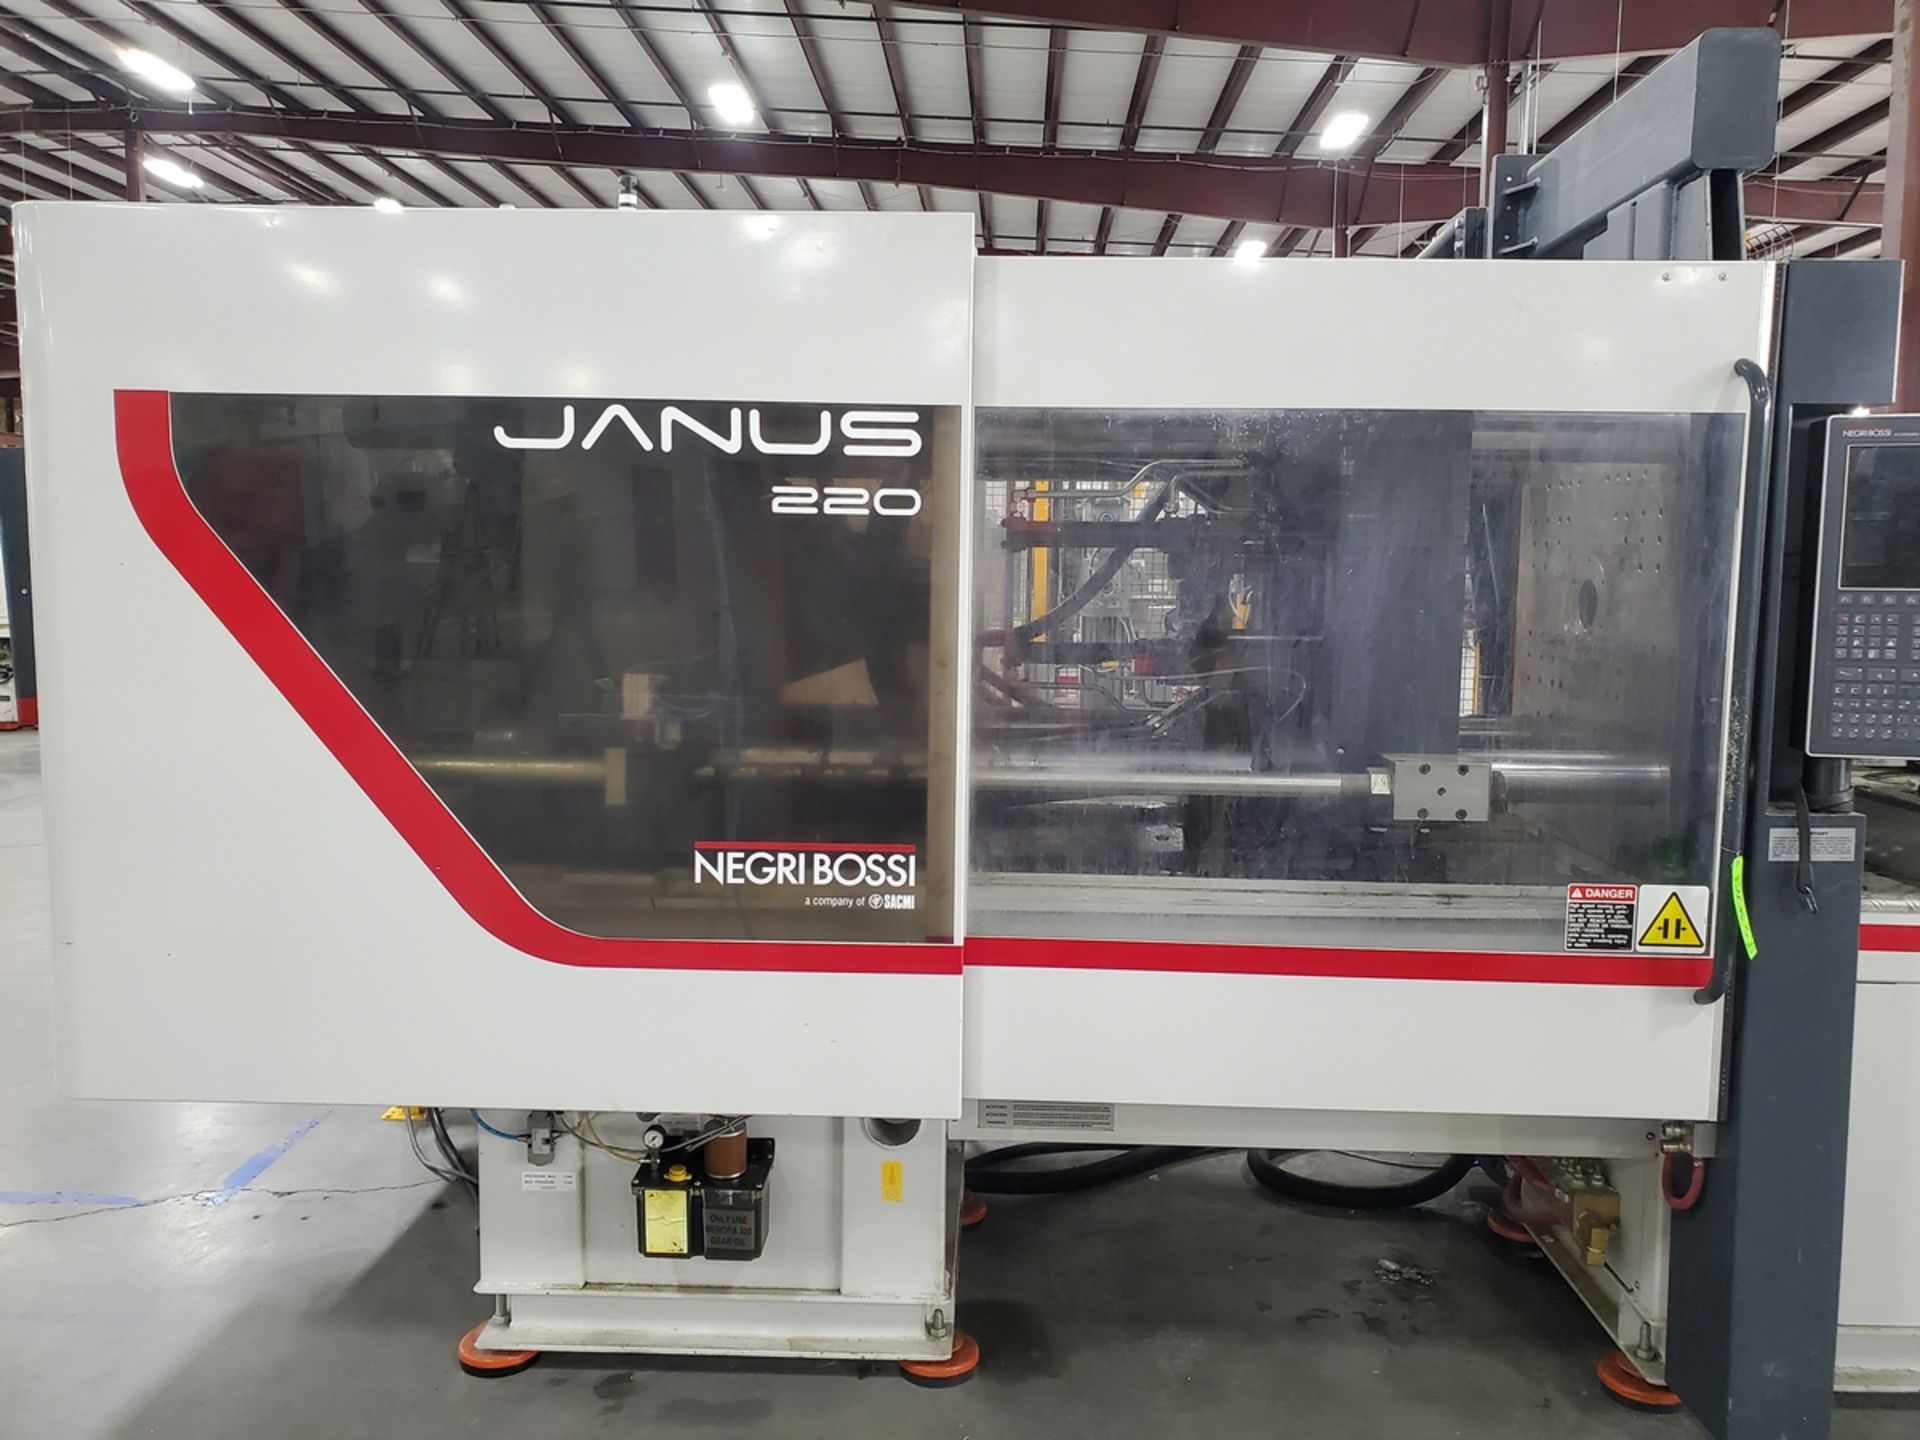 Negri Bossi Janus 220, 220 Ton Injection Molding Machine, New in 2017 - Image 3 of 13